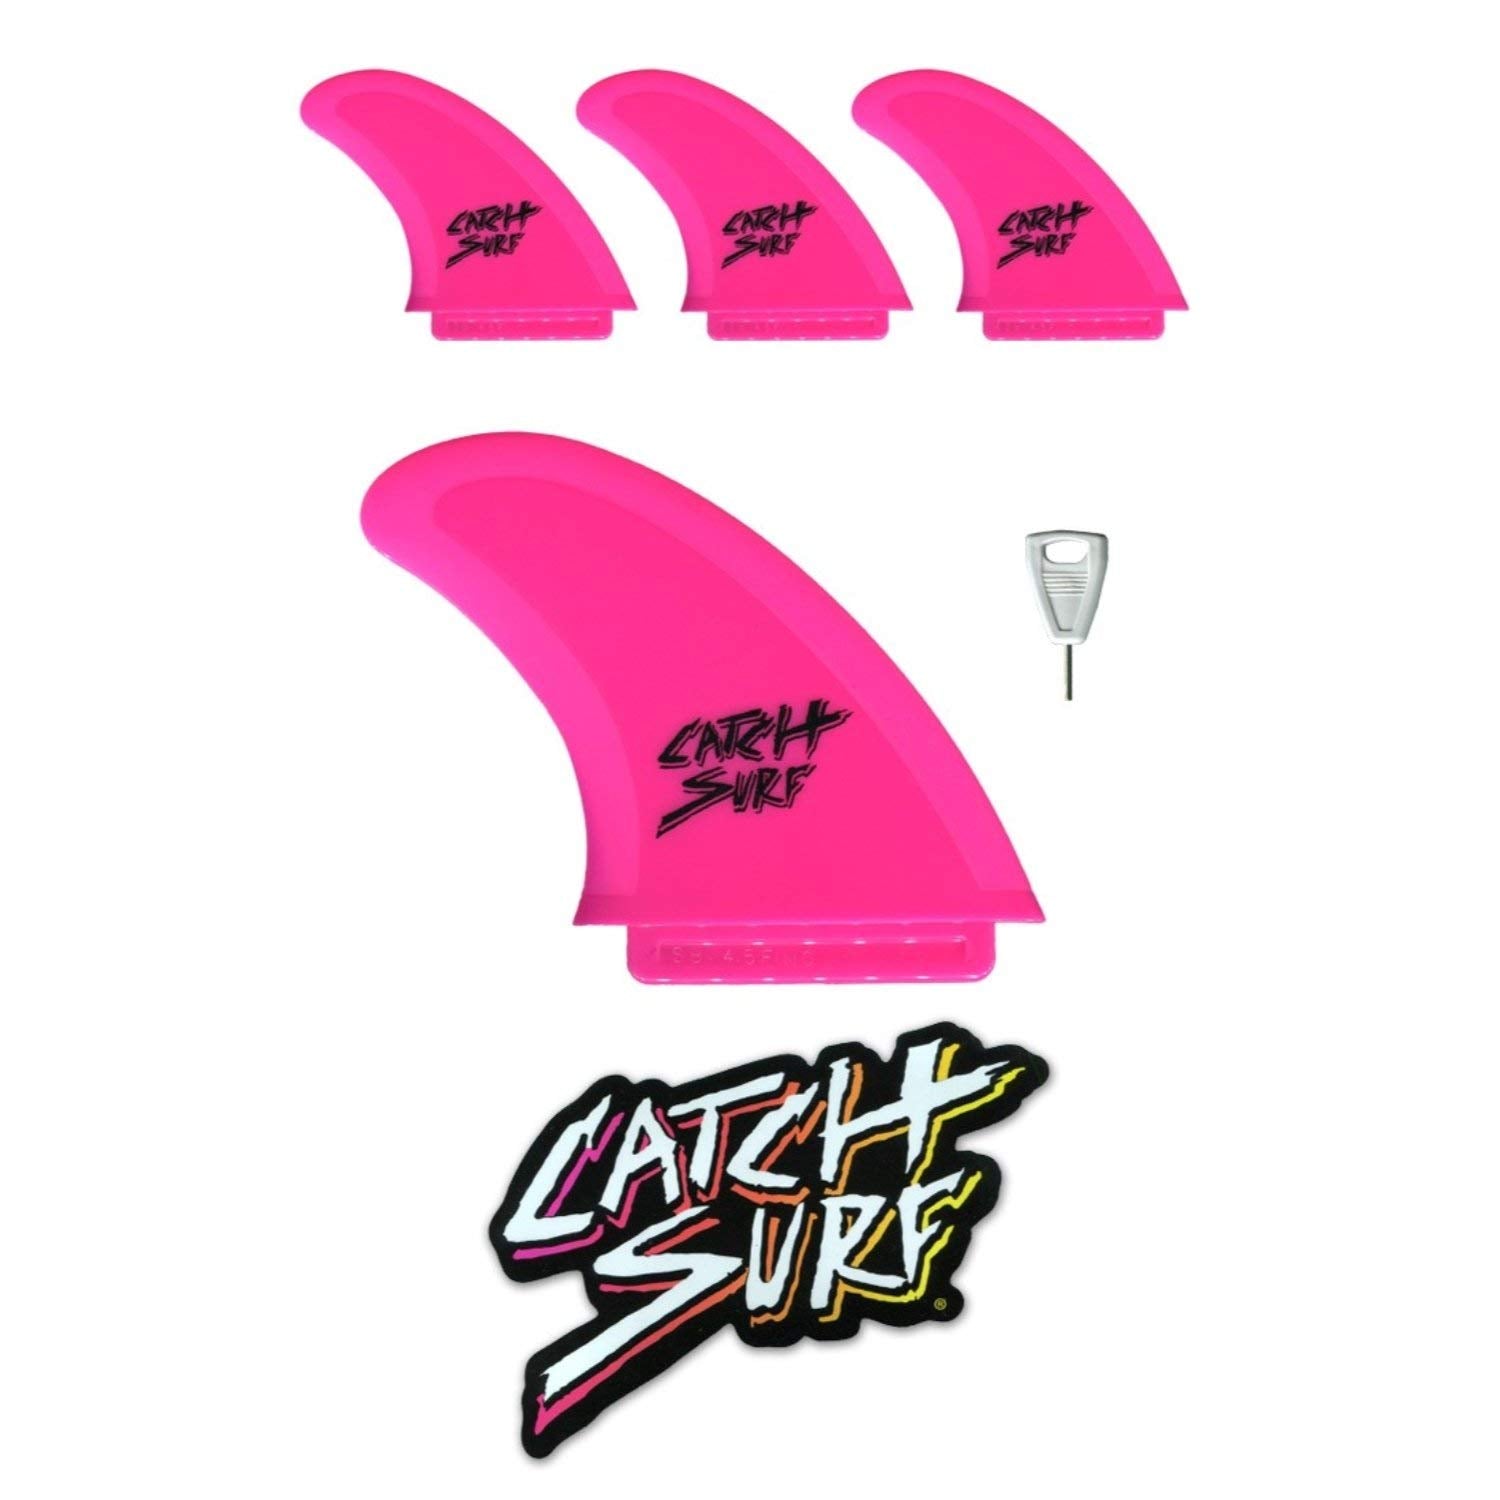 Catch Surf Hi-Performance Safety Edge Fins Quad-Fin Hot Pink